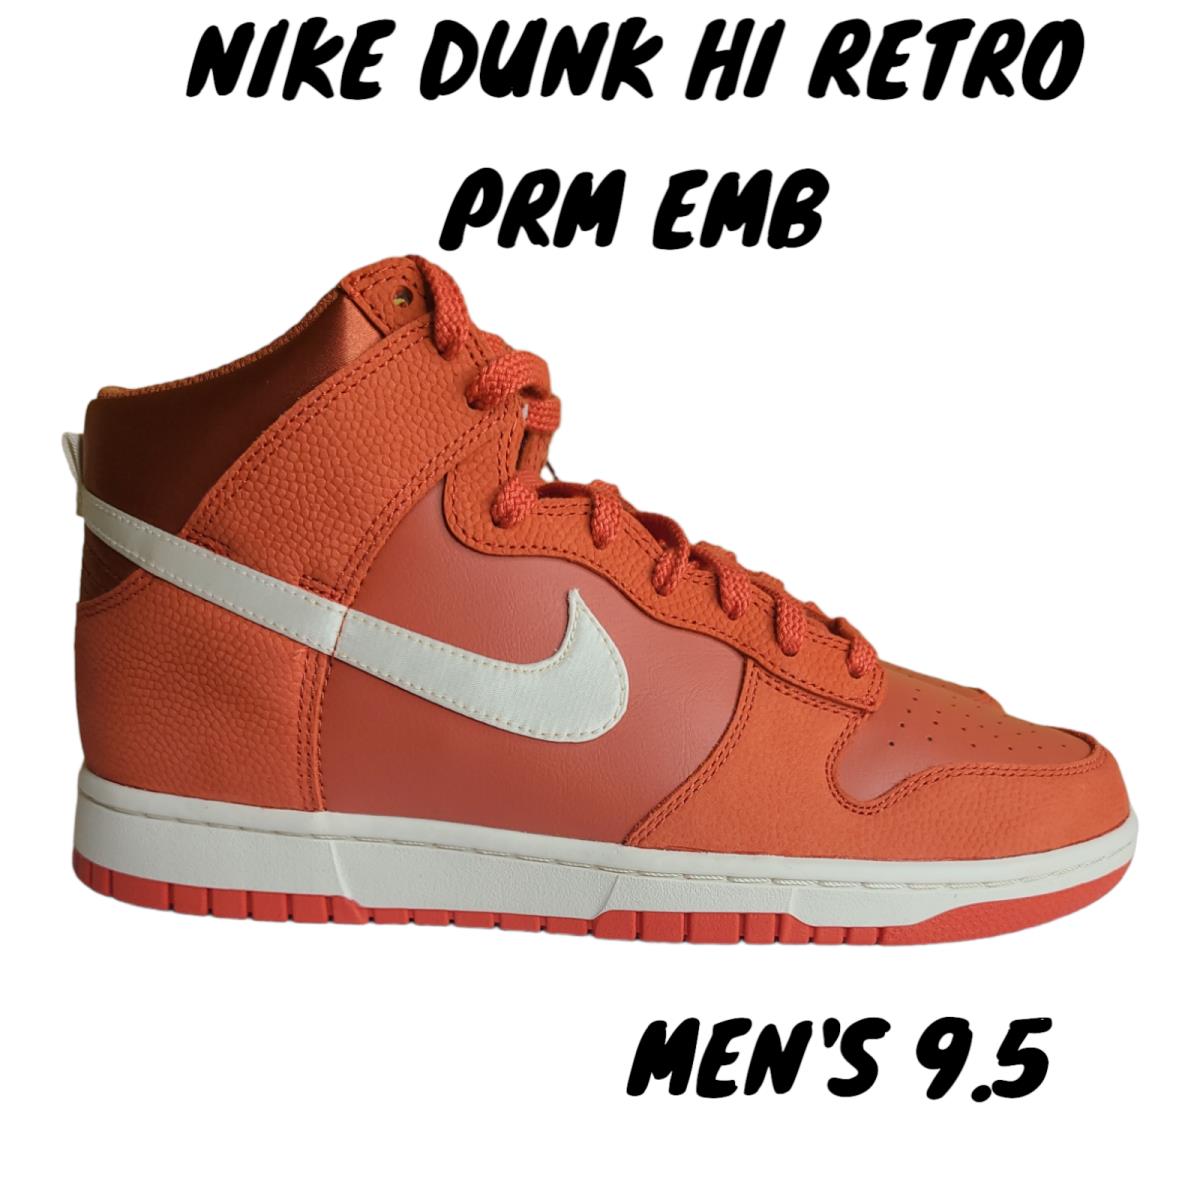 Nike Dunk Hi Retro Prm Emb DH8008-800 Mantra Orange Burnt Sunrise Black Size 9.5 - Mantra Orange Burnt Sunrise Black